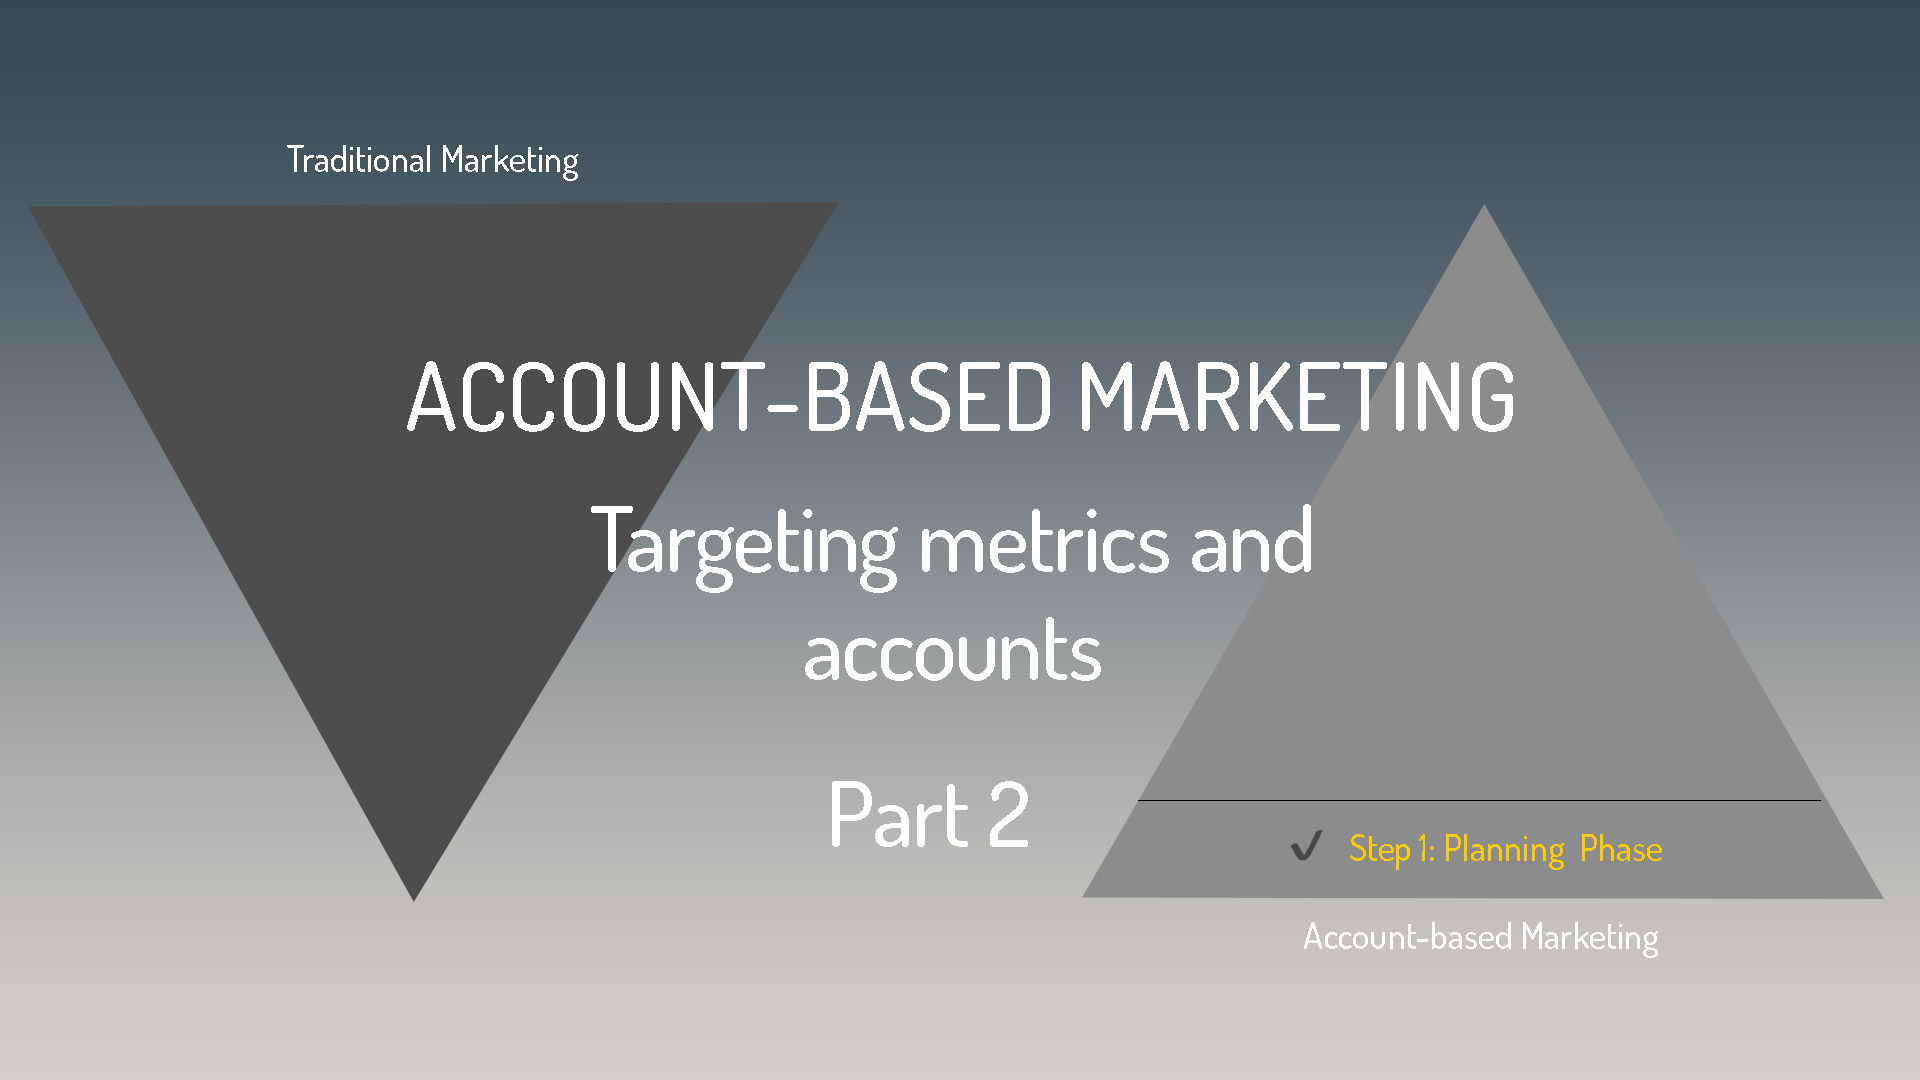 Targeting metrics and accounts